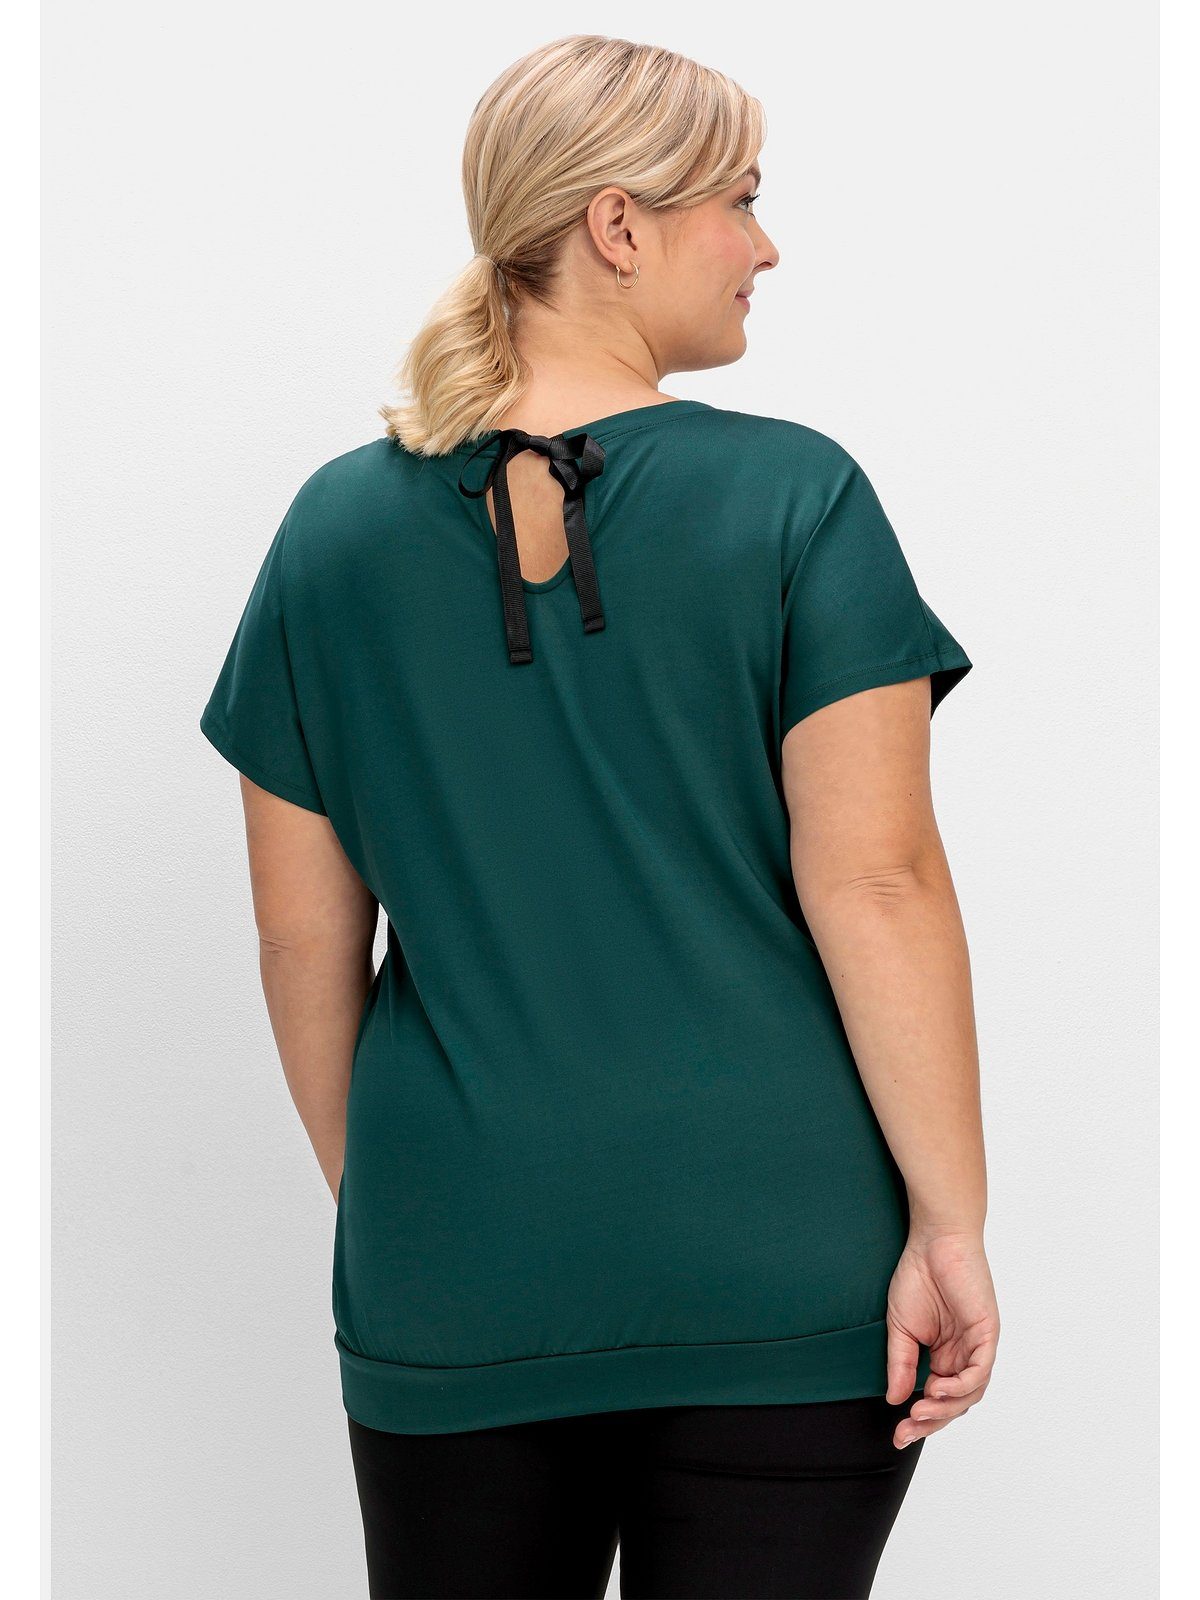 Sheego T-Shirt Große aus Funktionsmaterial tiefgrün Größen